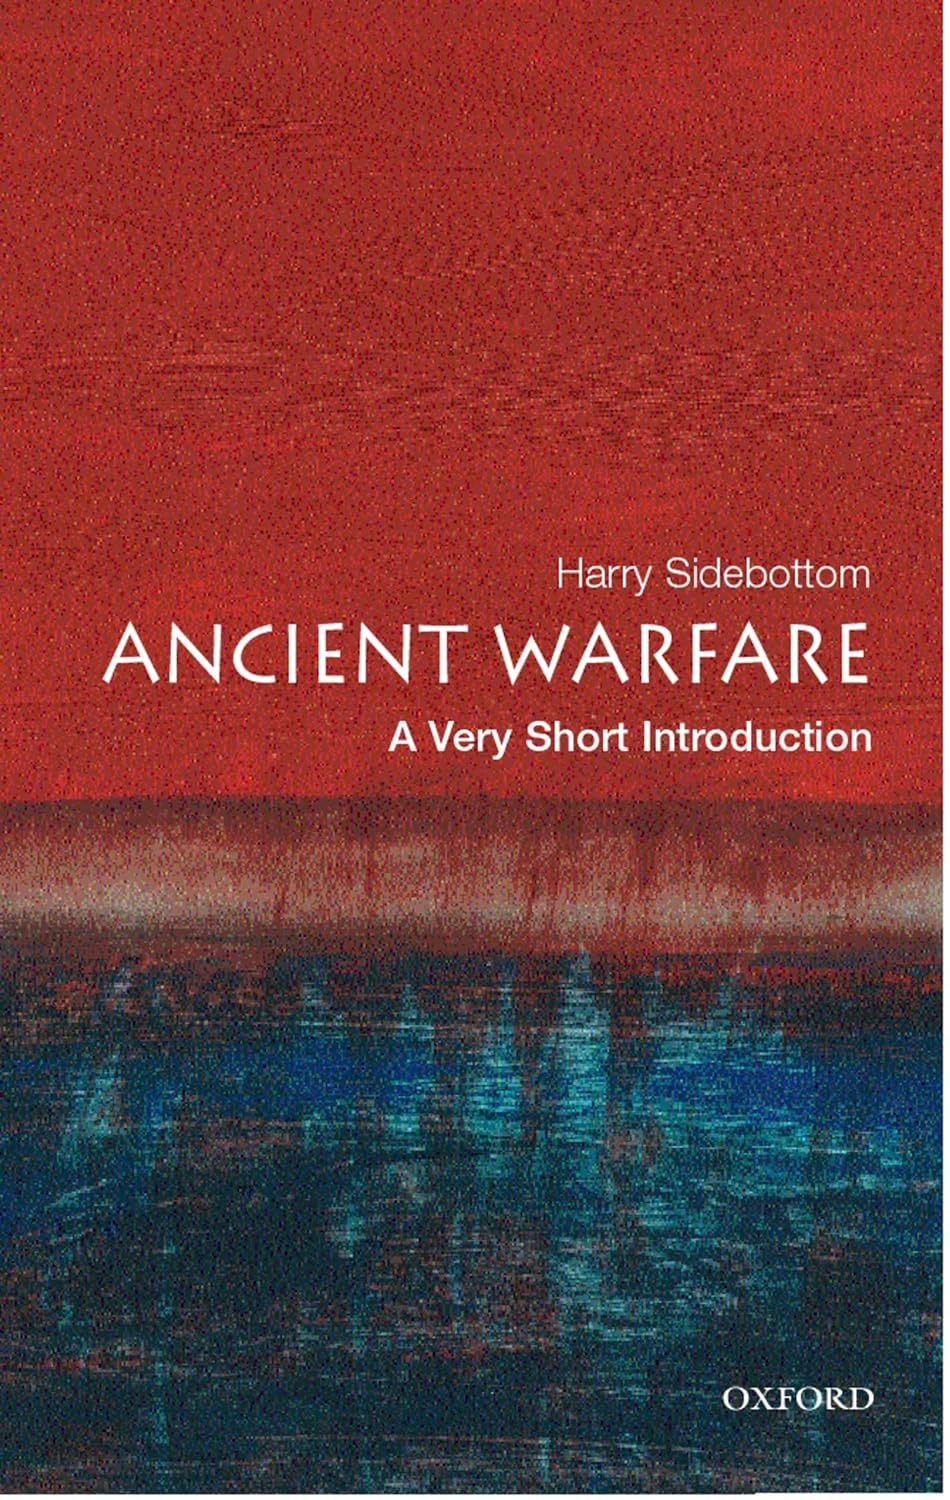 Ancient Warfare (Sidebottom - Oxford VSI)